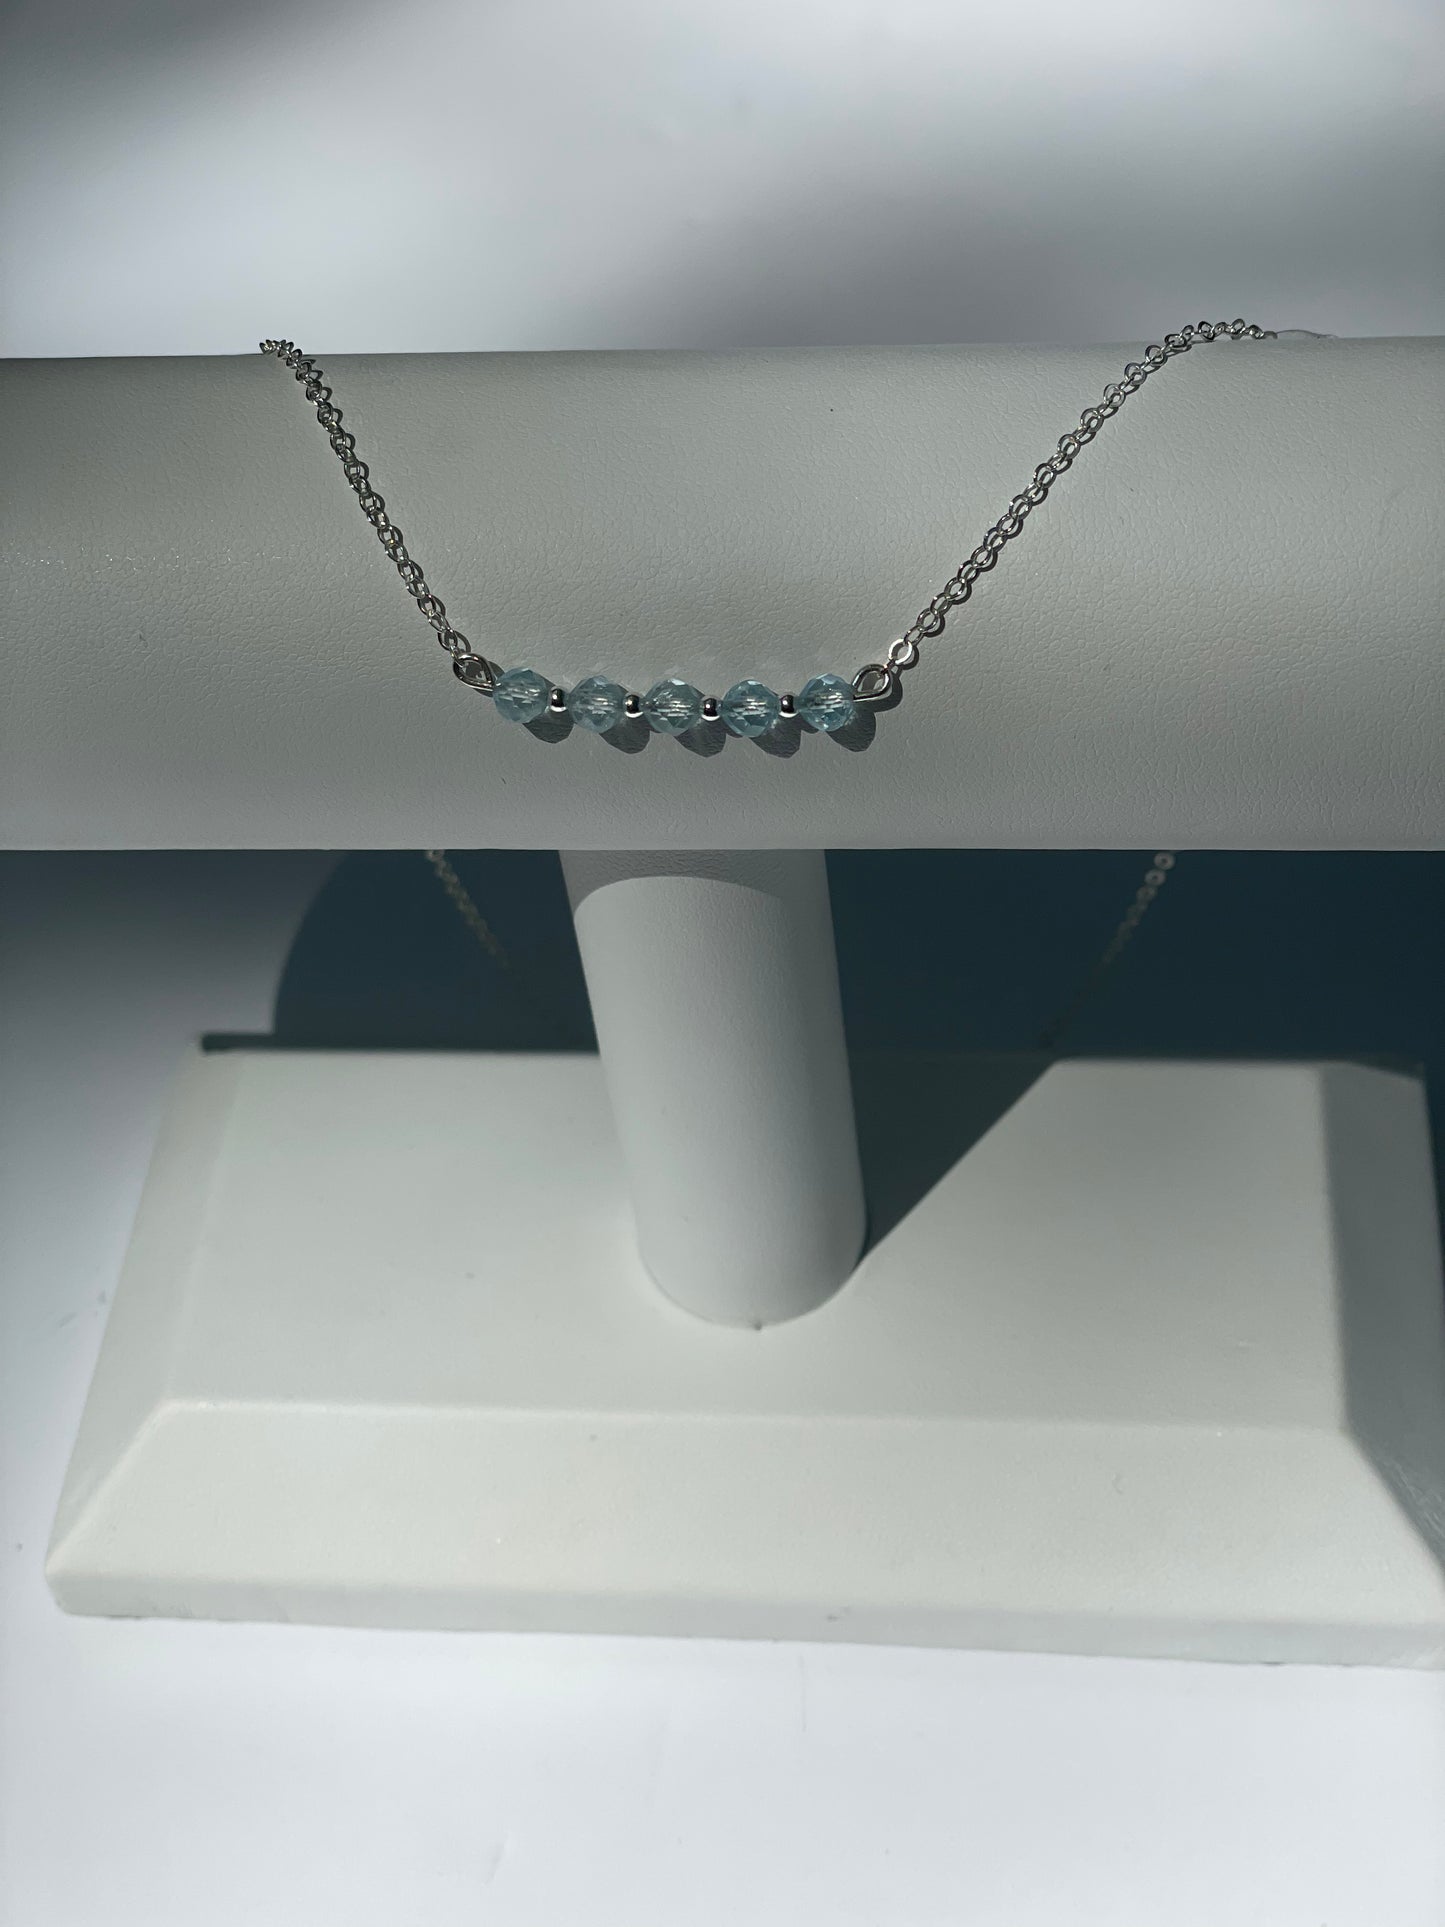 Baby blue topaz necklace